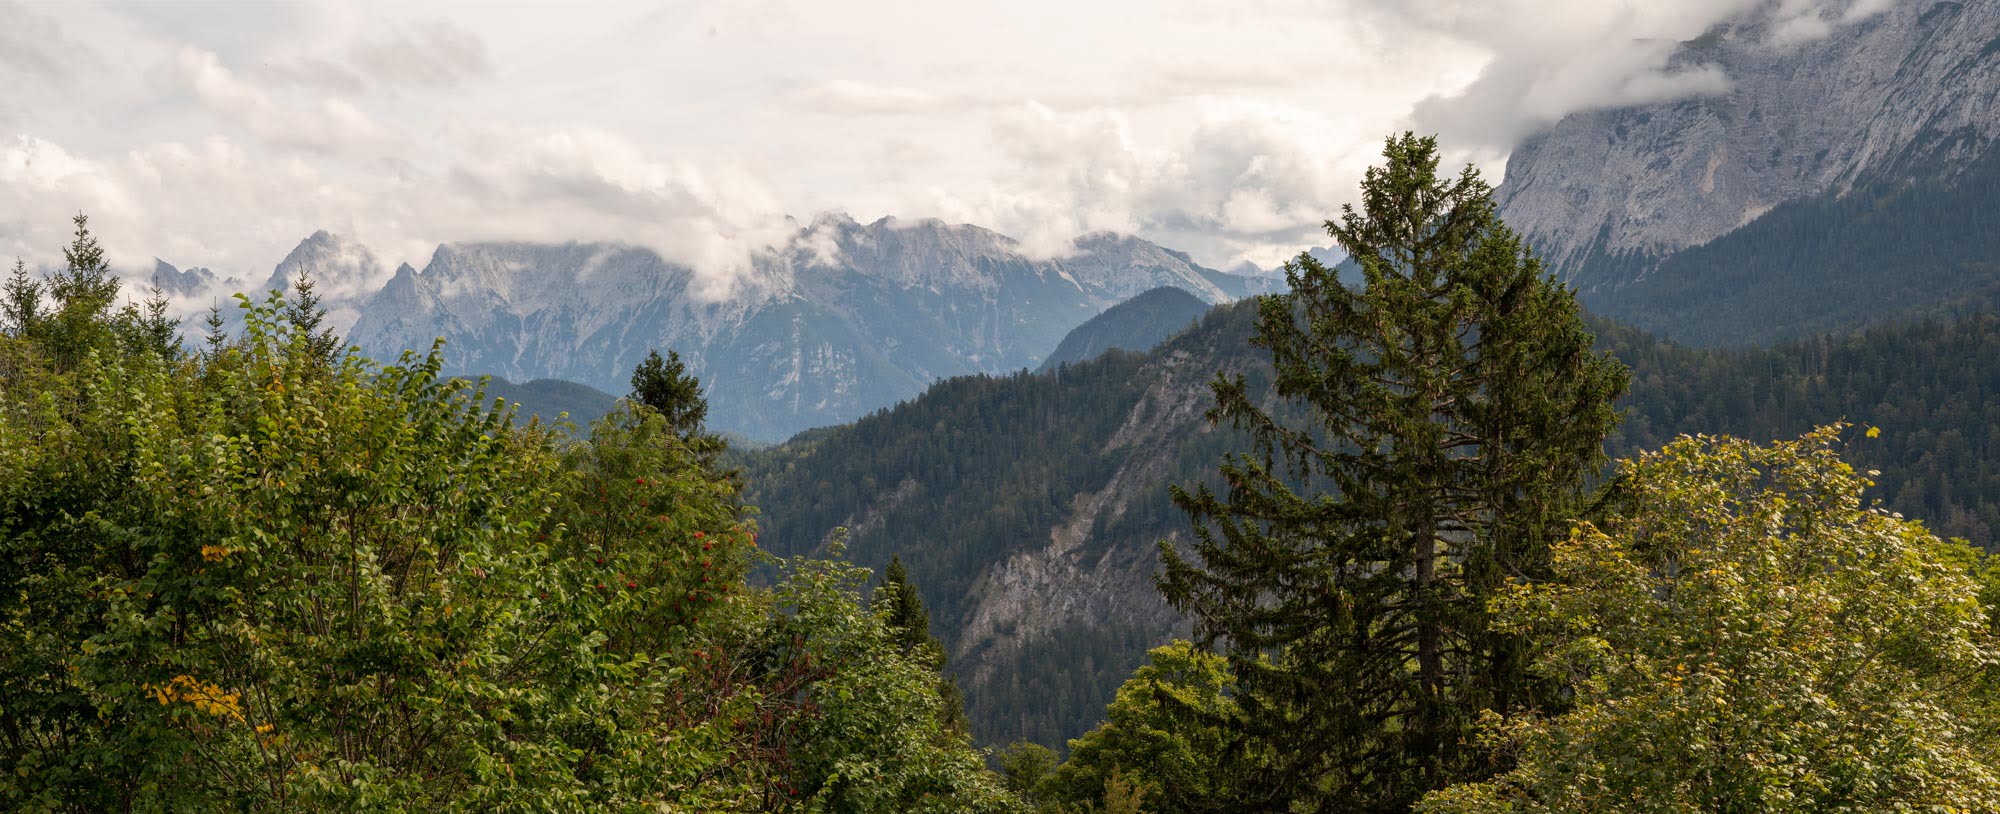 Panoramic view of the mountains surrounding Garmisch